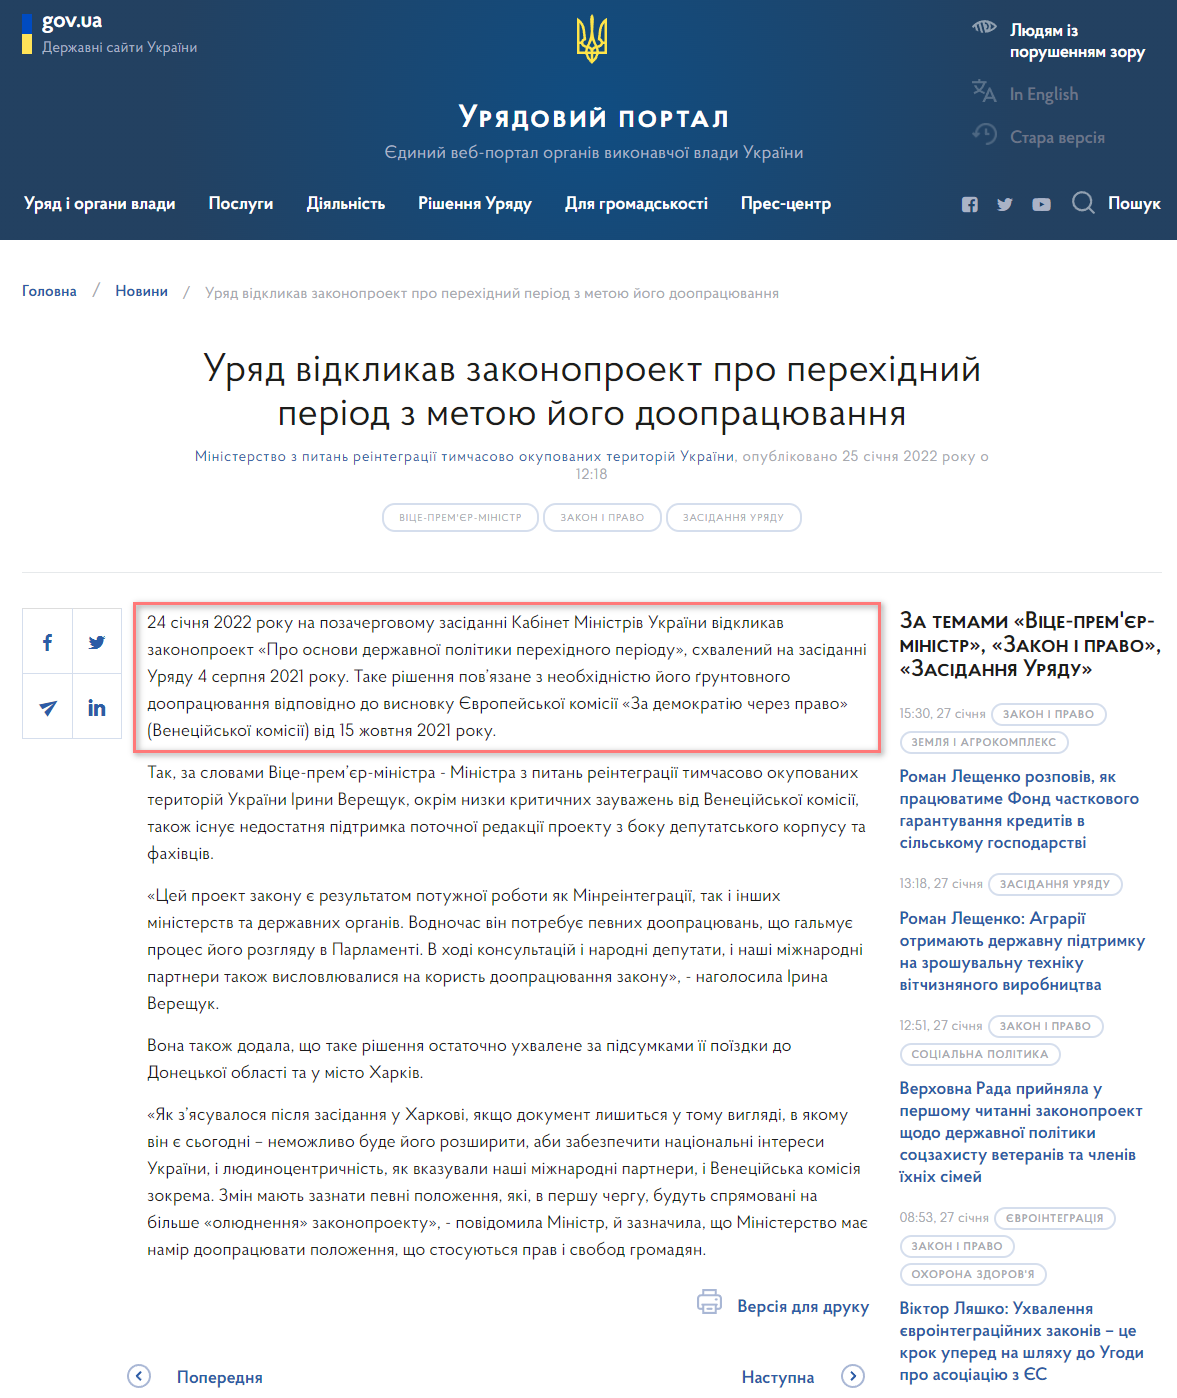 https://www.kmu.gov.ua/news/uryad-vidklikav-zakonoproekt-pro-perehidnij-period-z-metoyu-jogo-doopracyuvannya